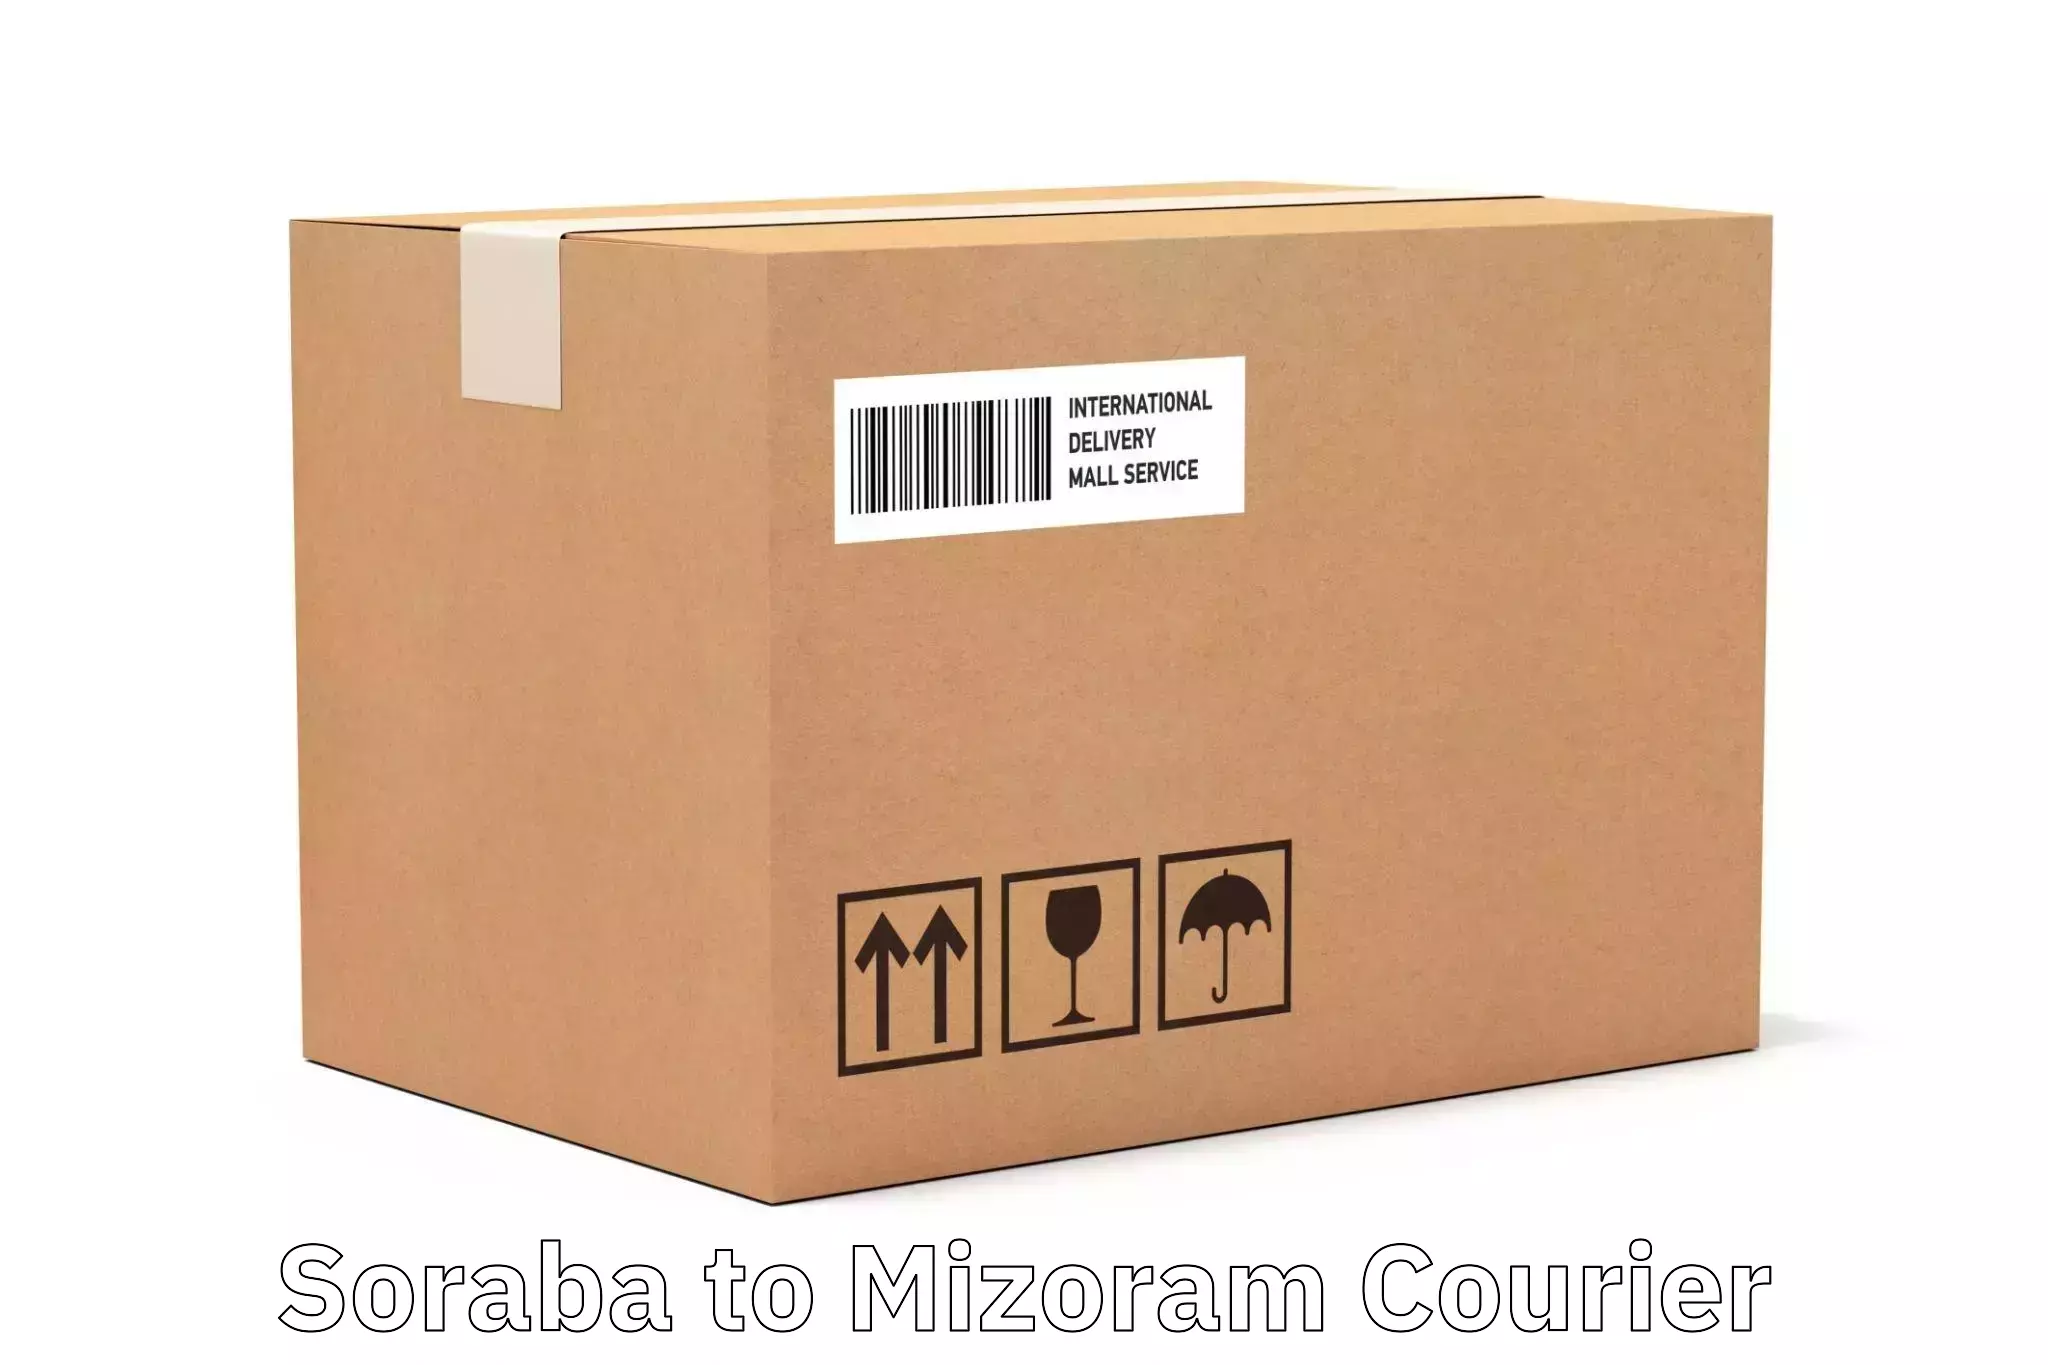 Smart parcel tracking Soraba to Siaha